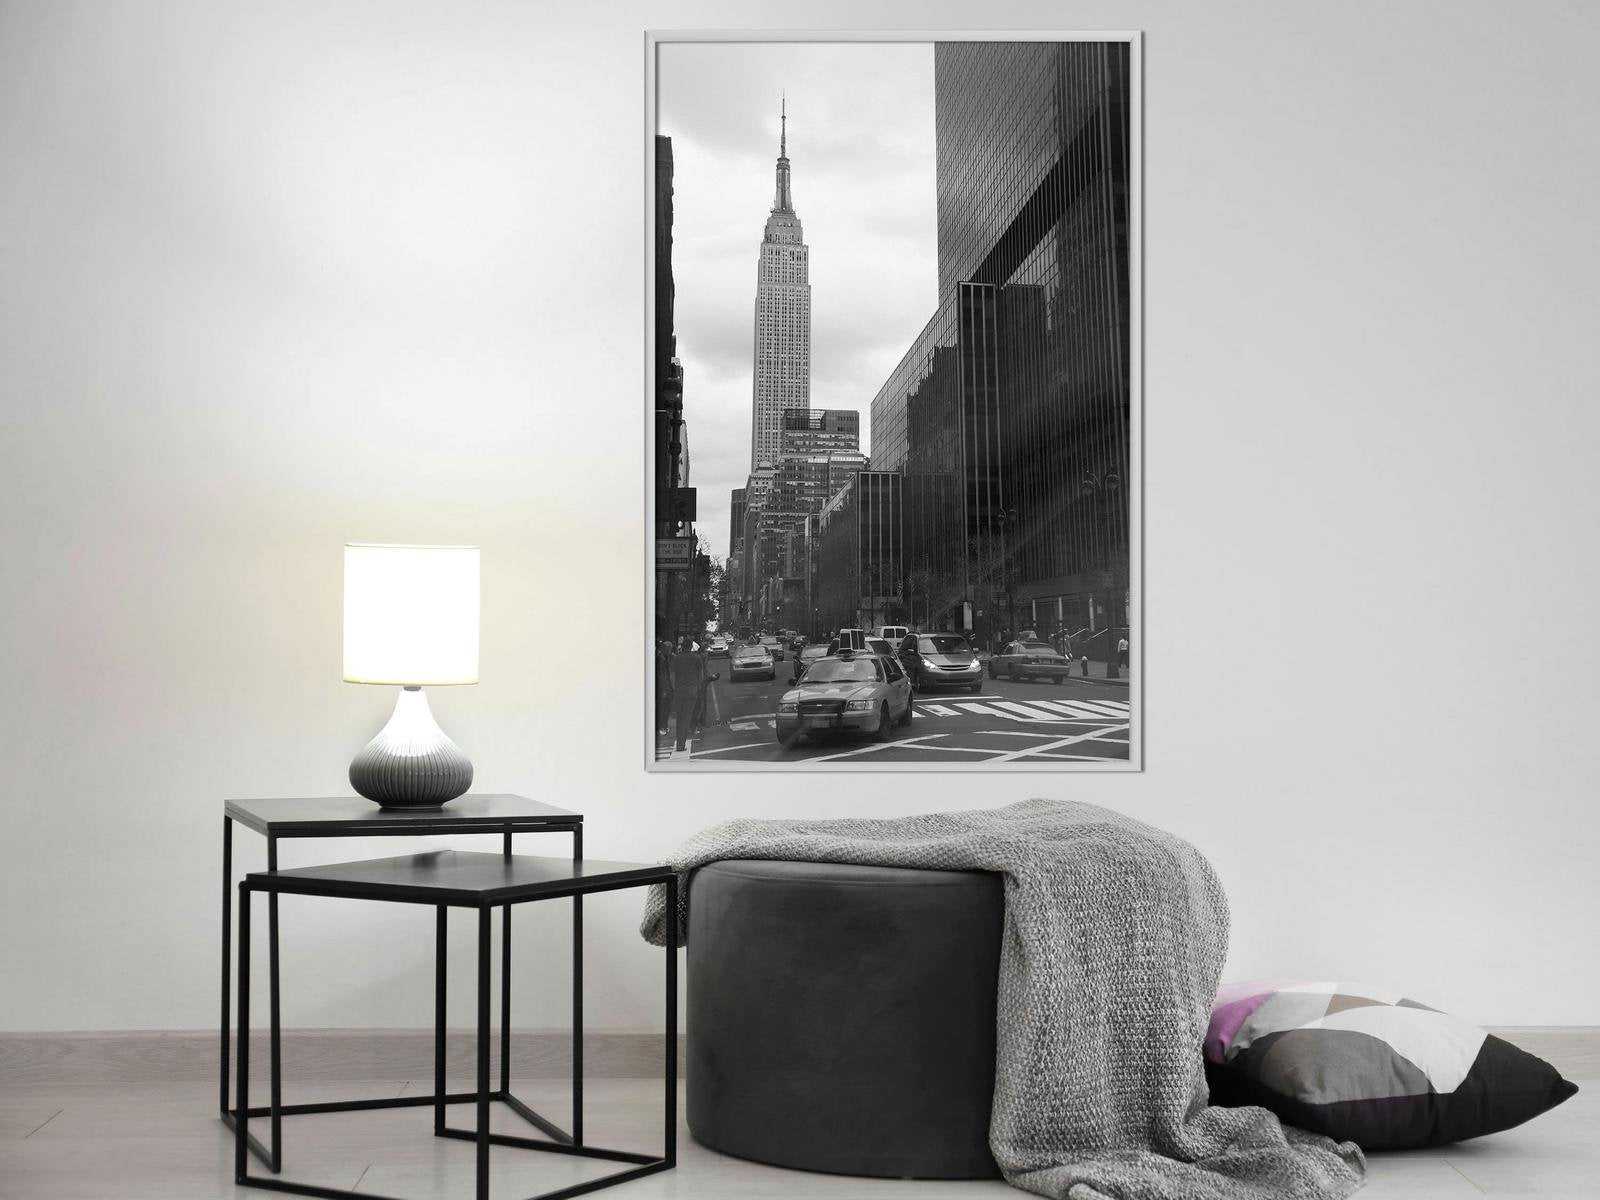 Poster de l'Empire State Building